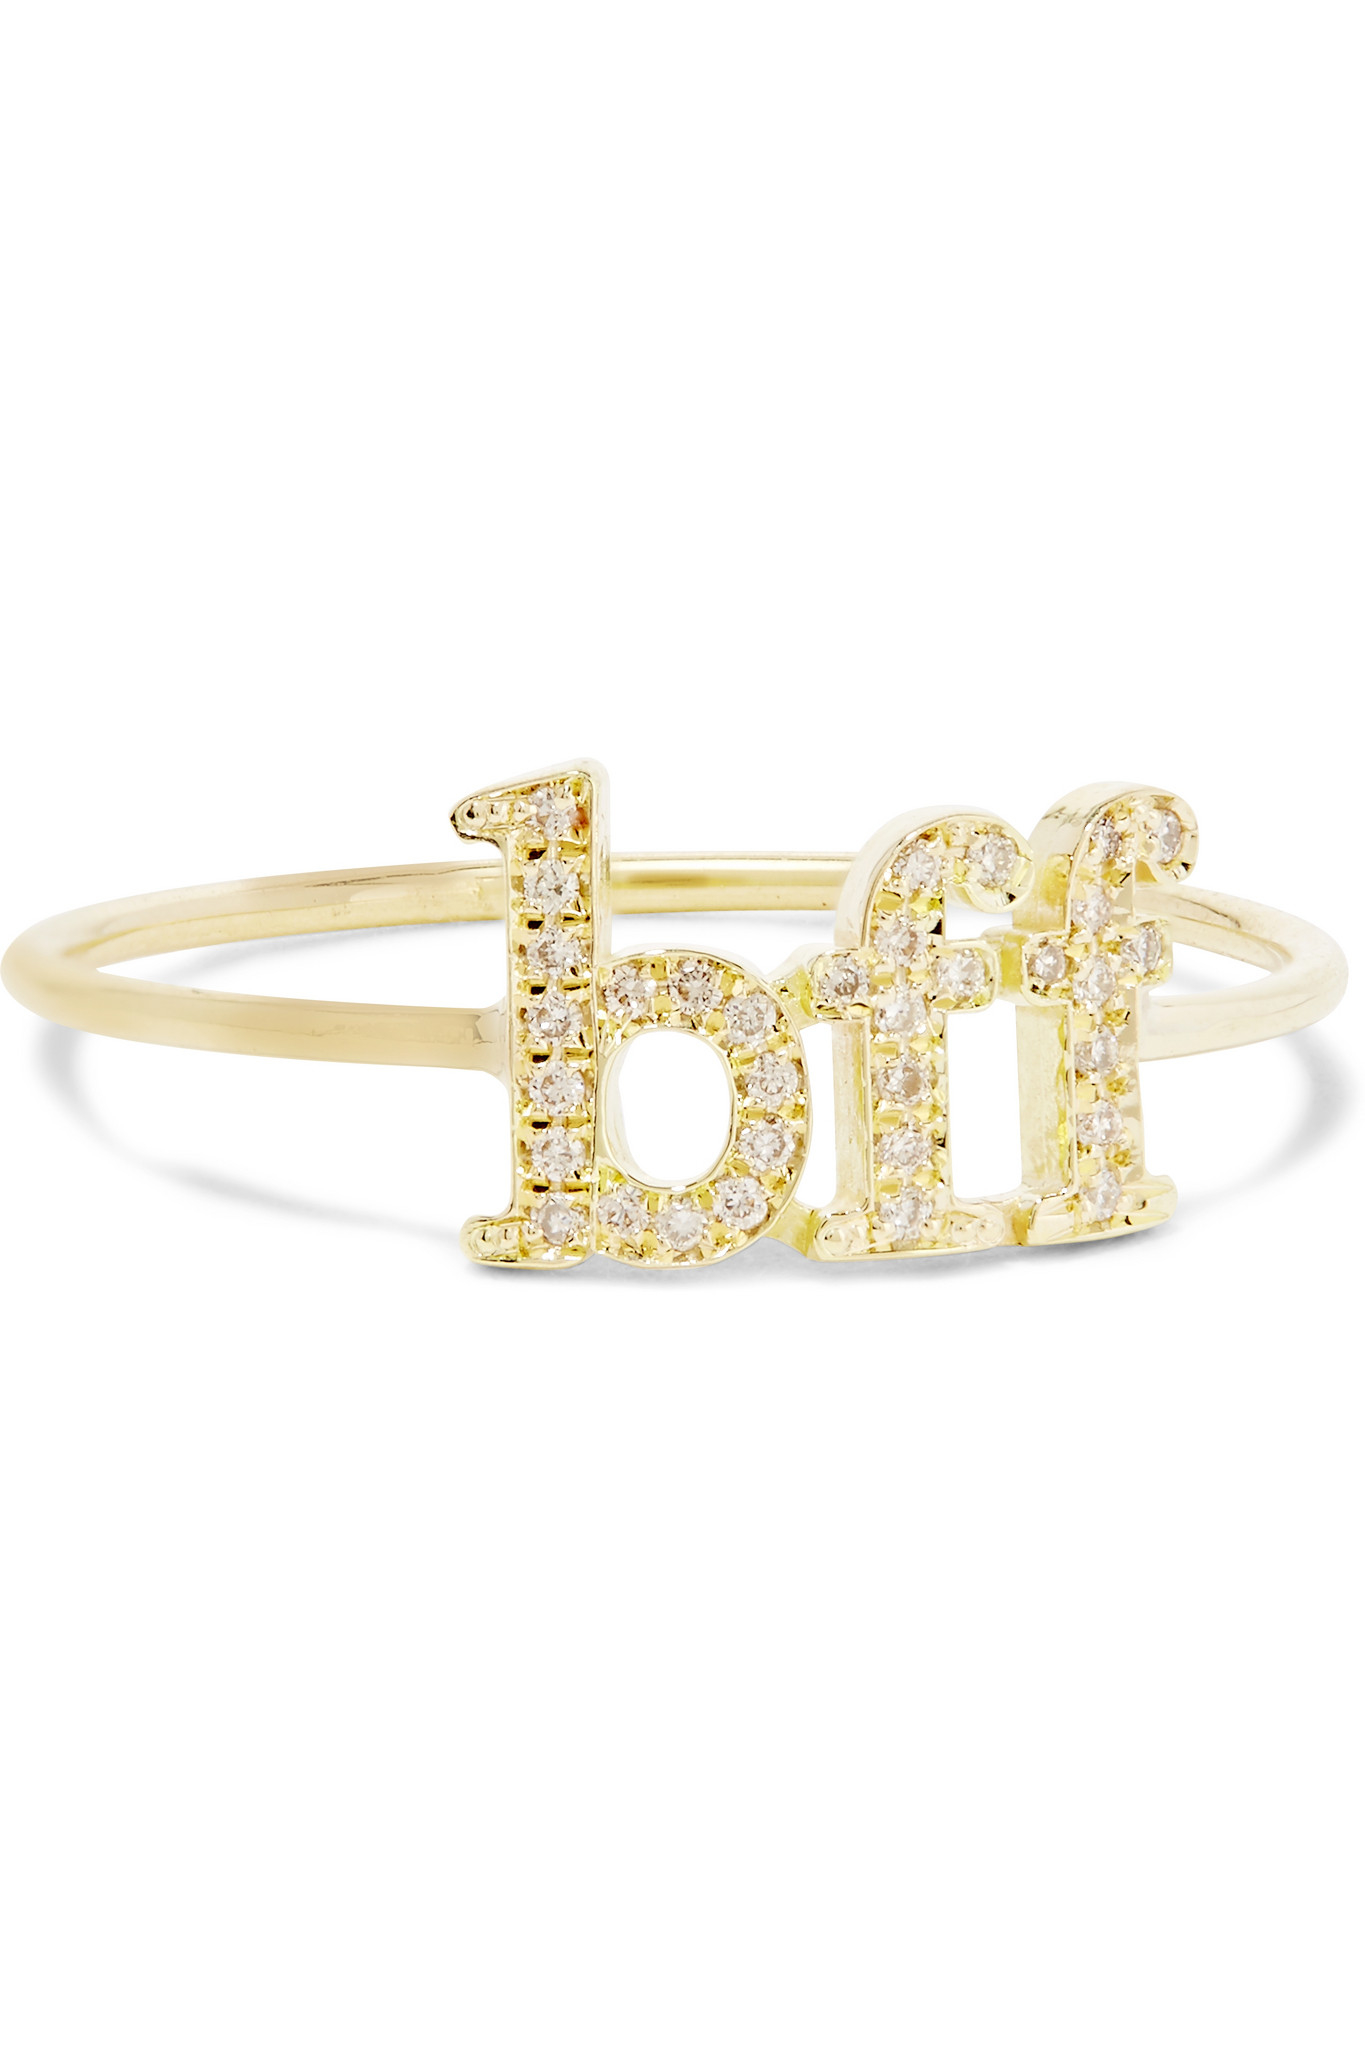 Lyst - Jennifer Meyer Bff 18-karat Gold Diamond Ring in ...